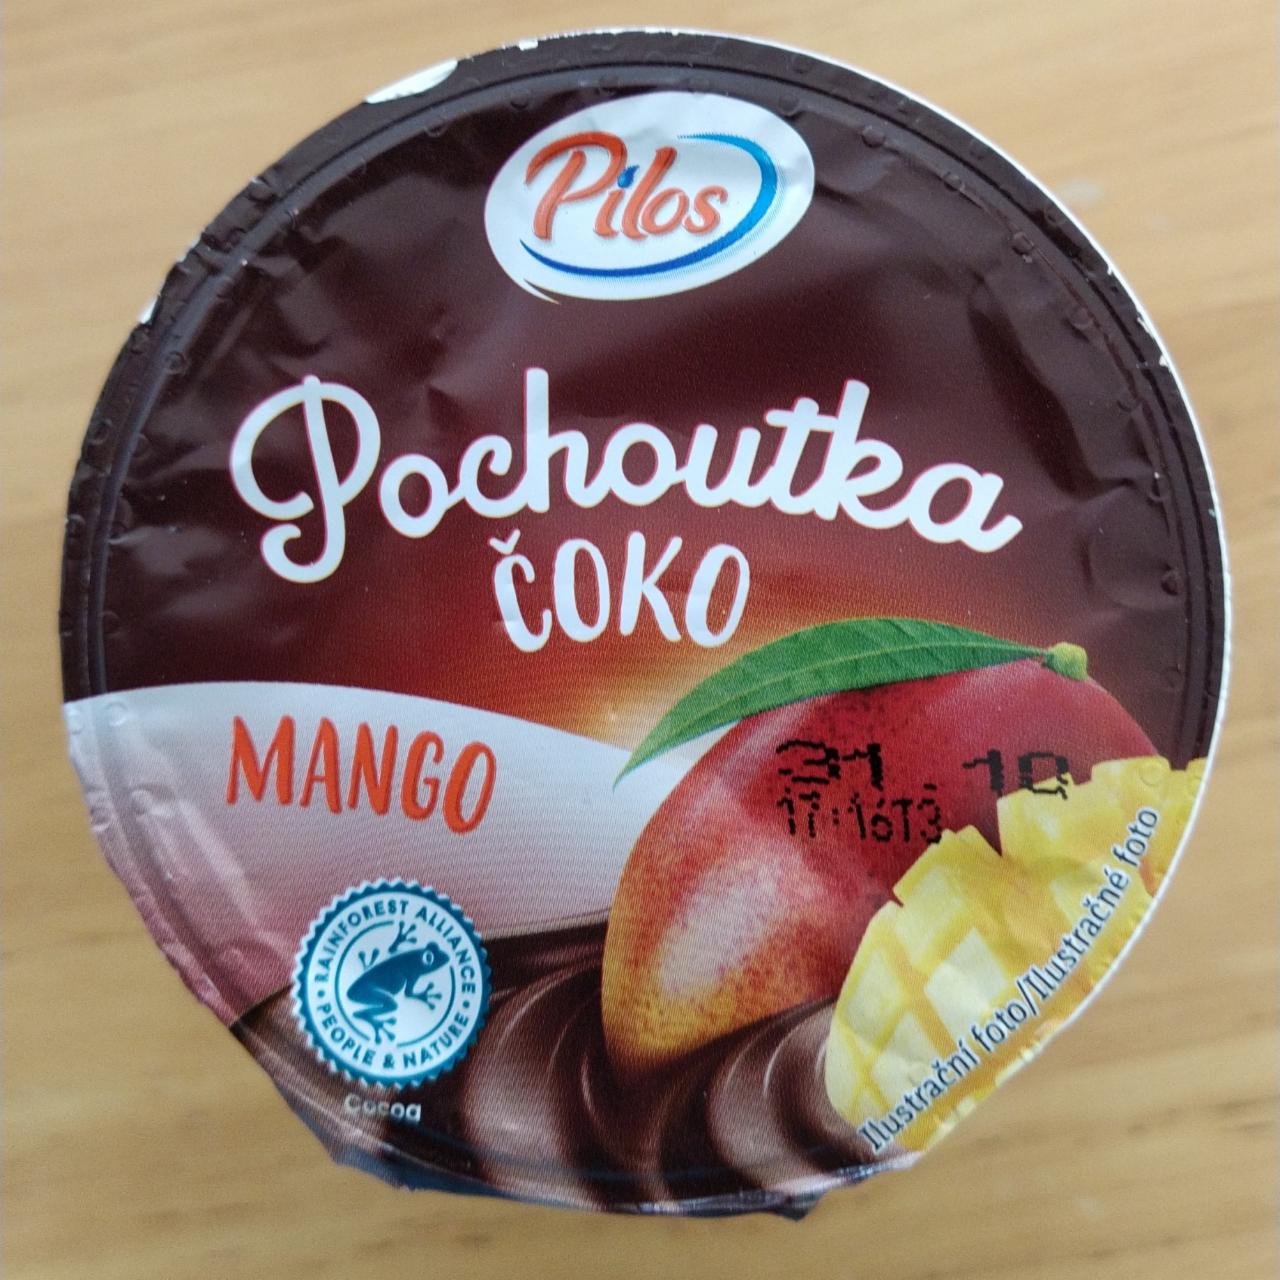 Fotografie - Pochoutka čoko mango Pilos